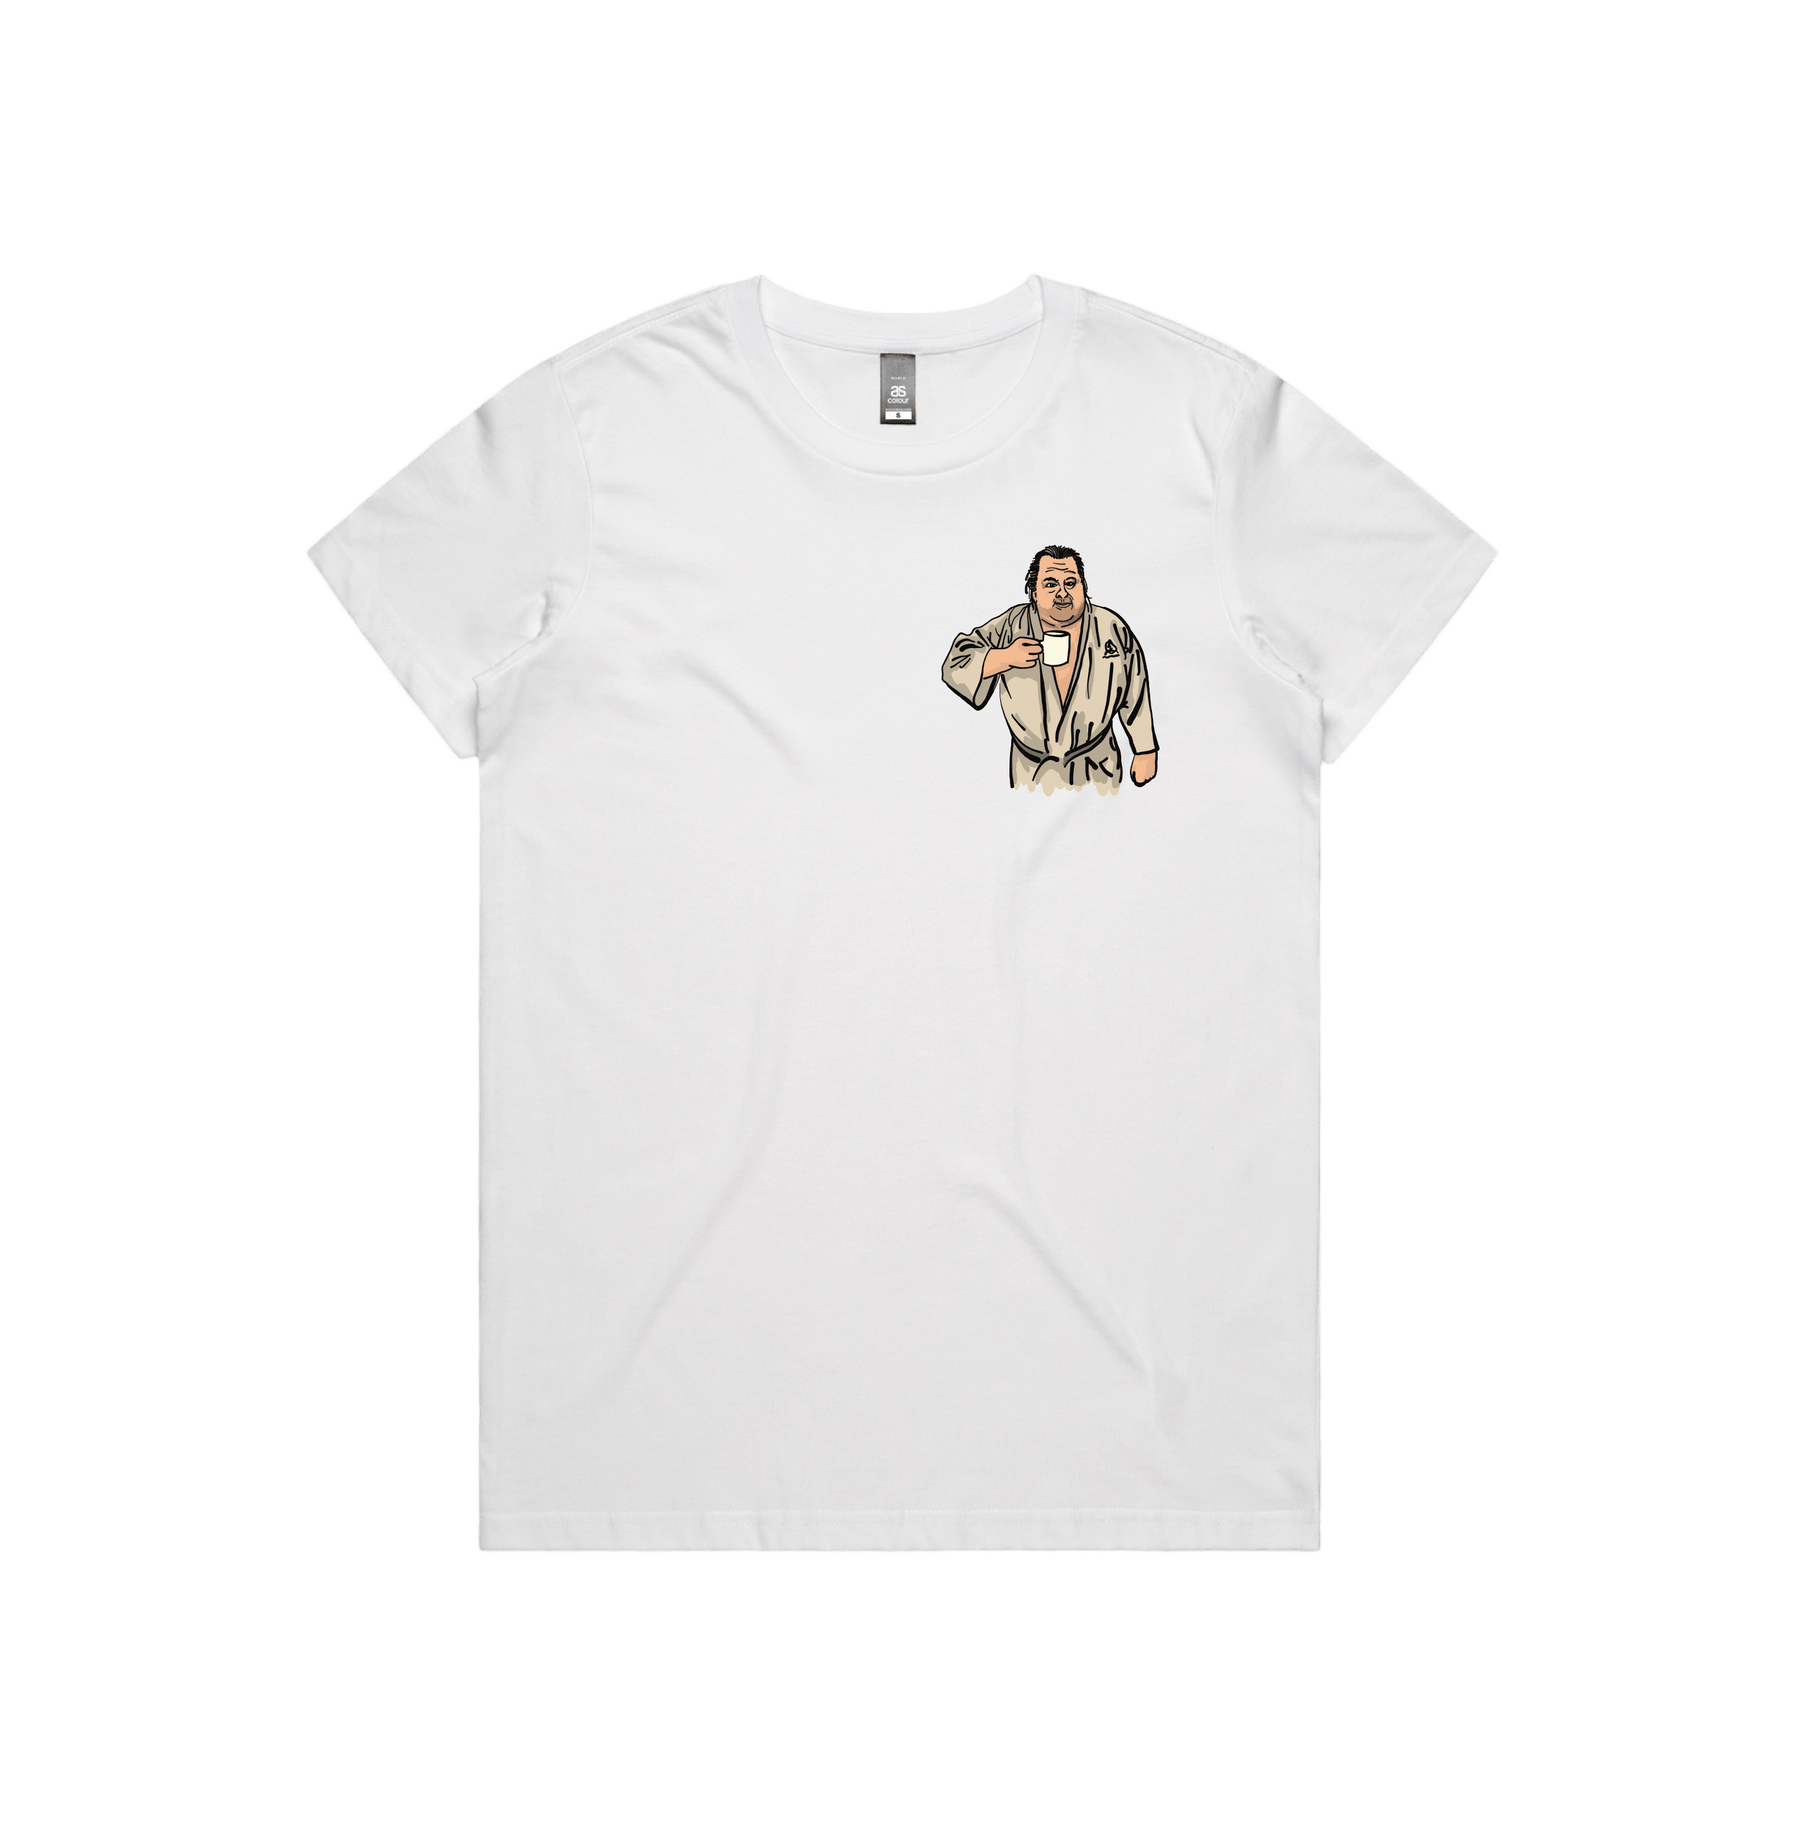 XS / White / Small Front Design Big Ed (90 Day Fiance) 🛺 - Women's T Shirt